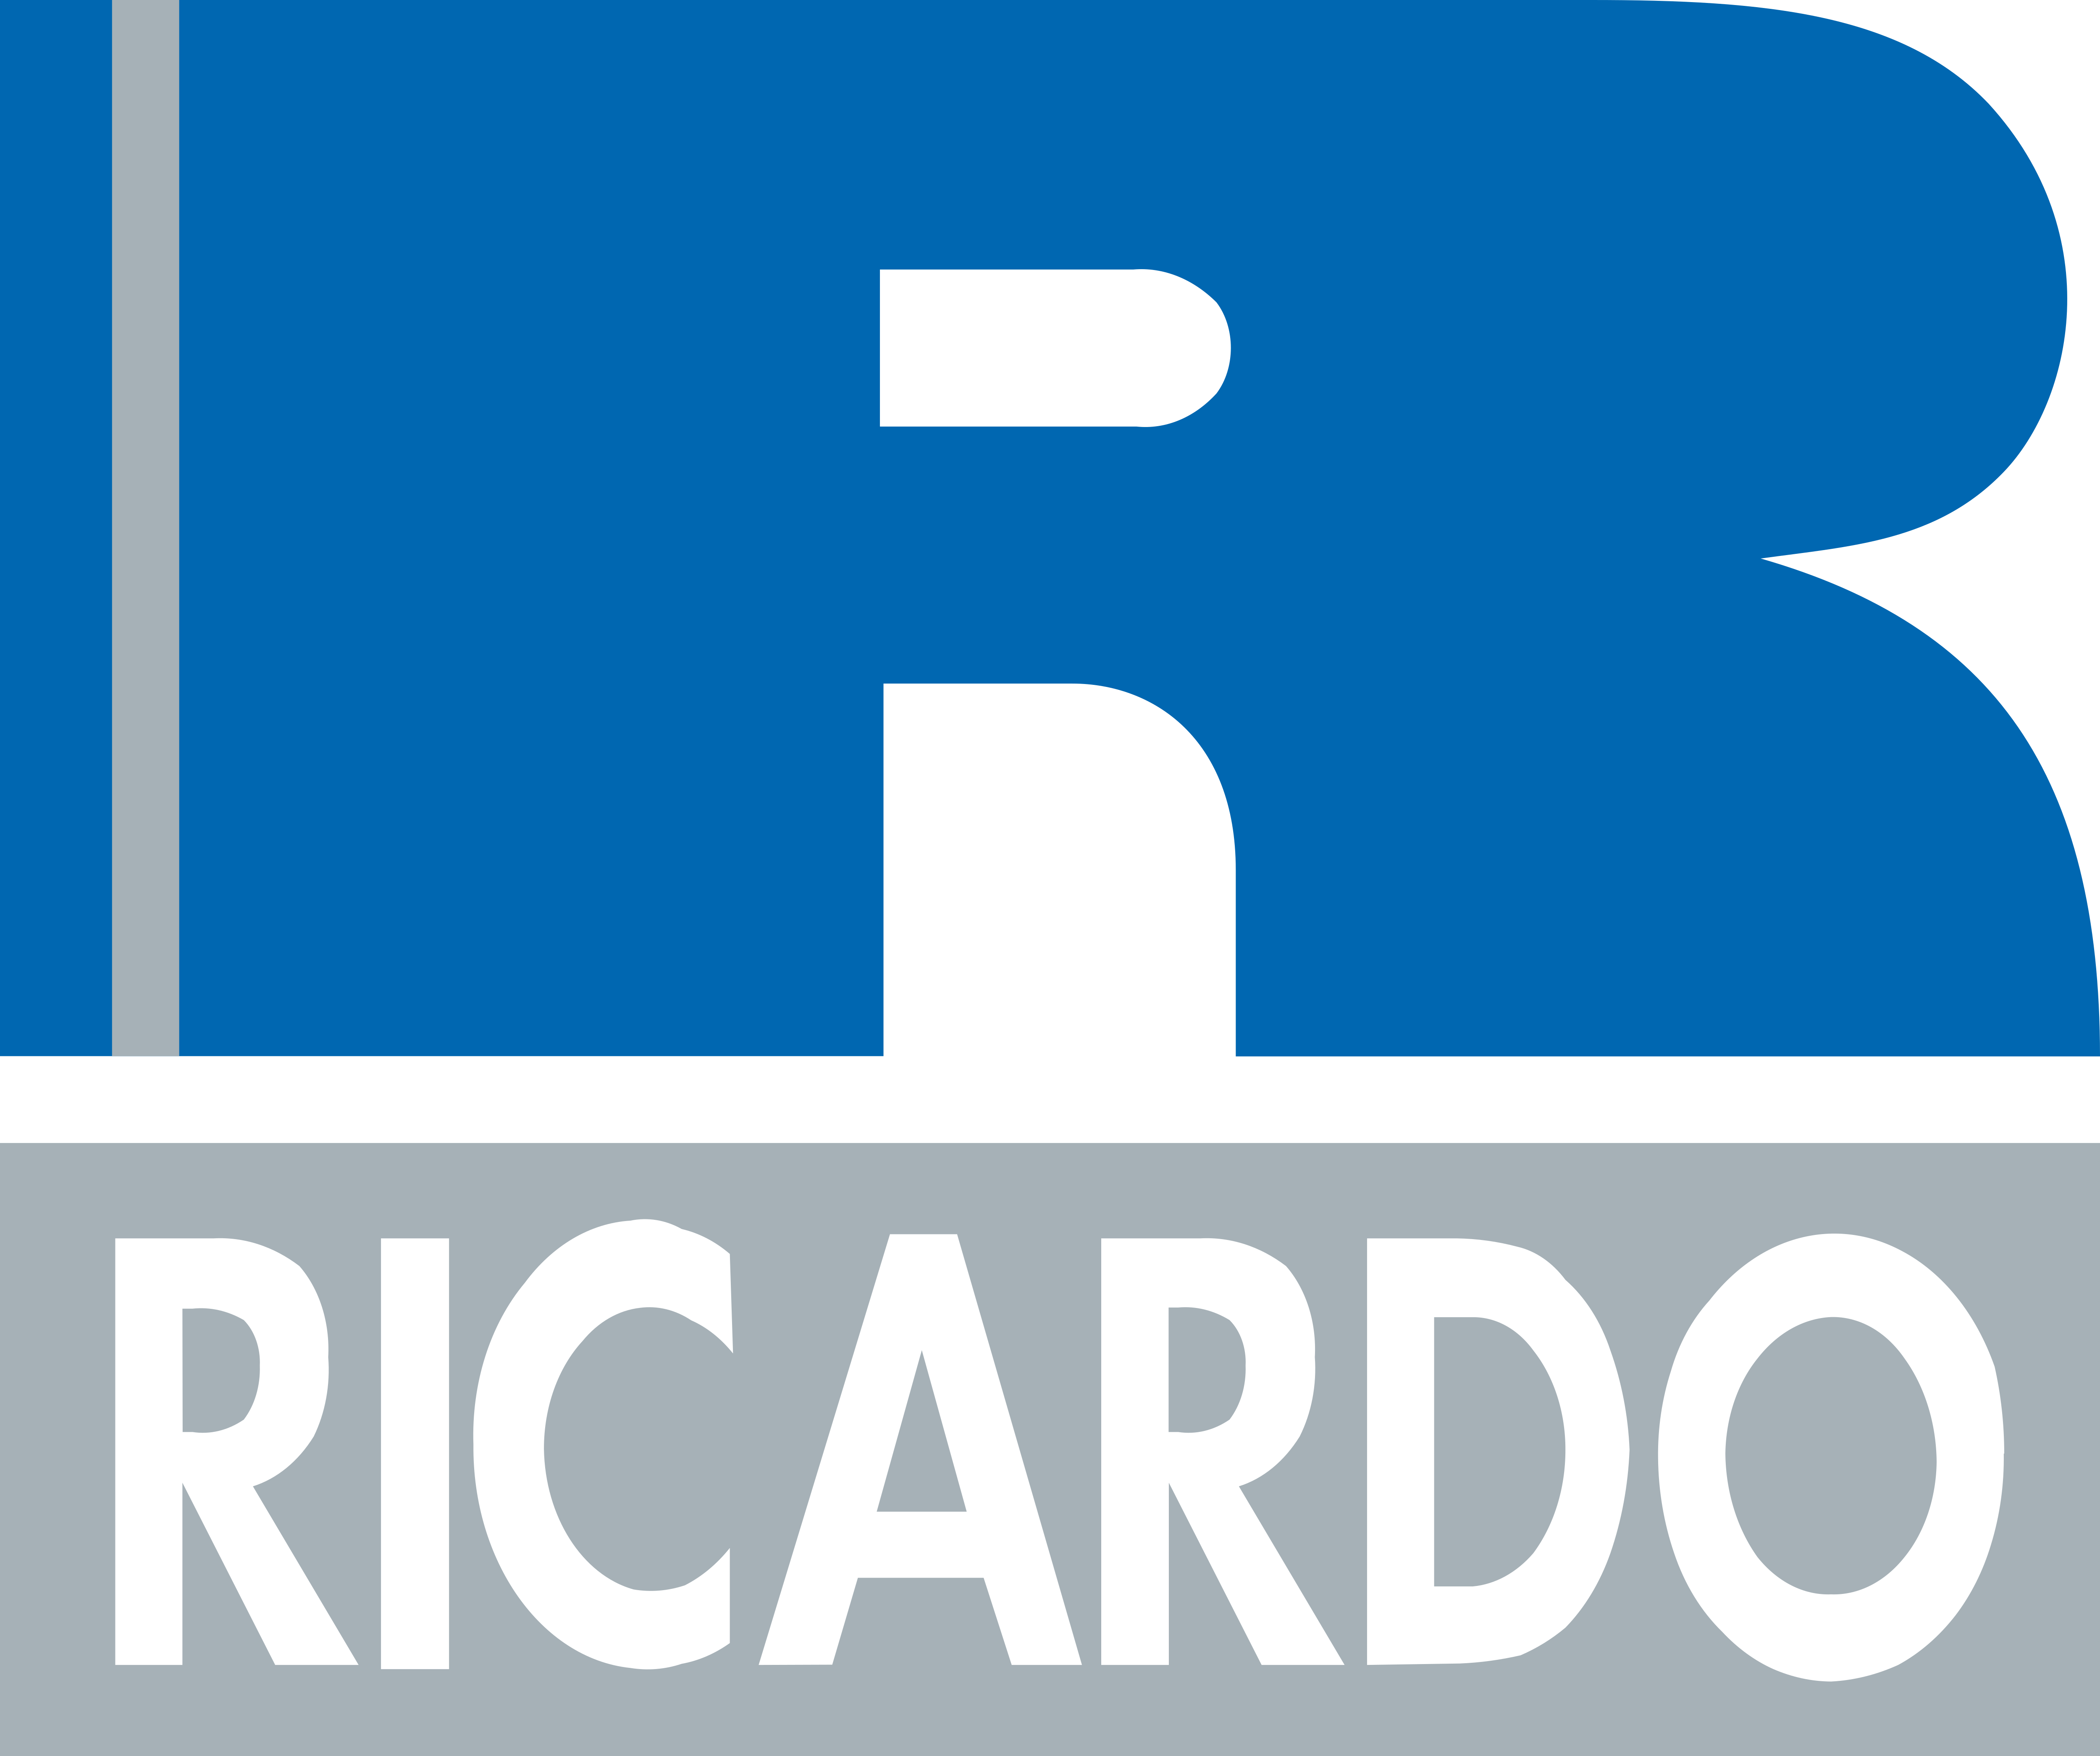 Ricardo – Logos Download